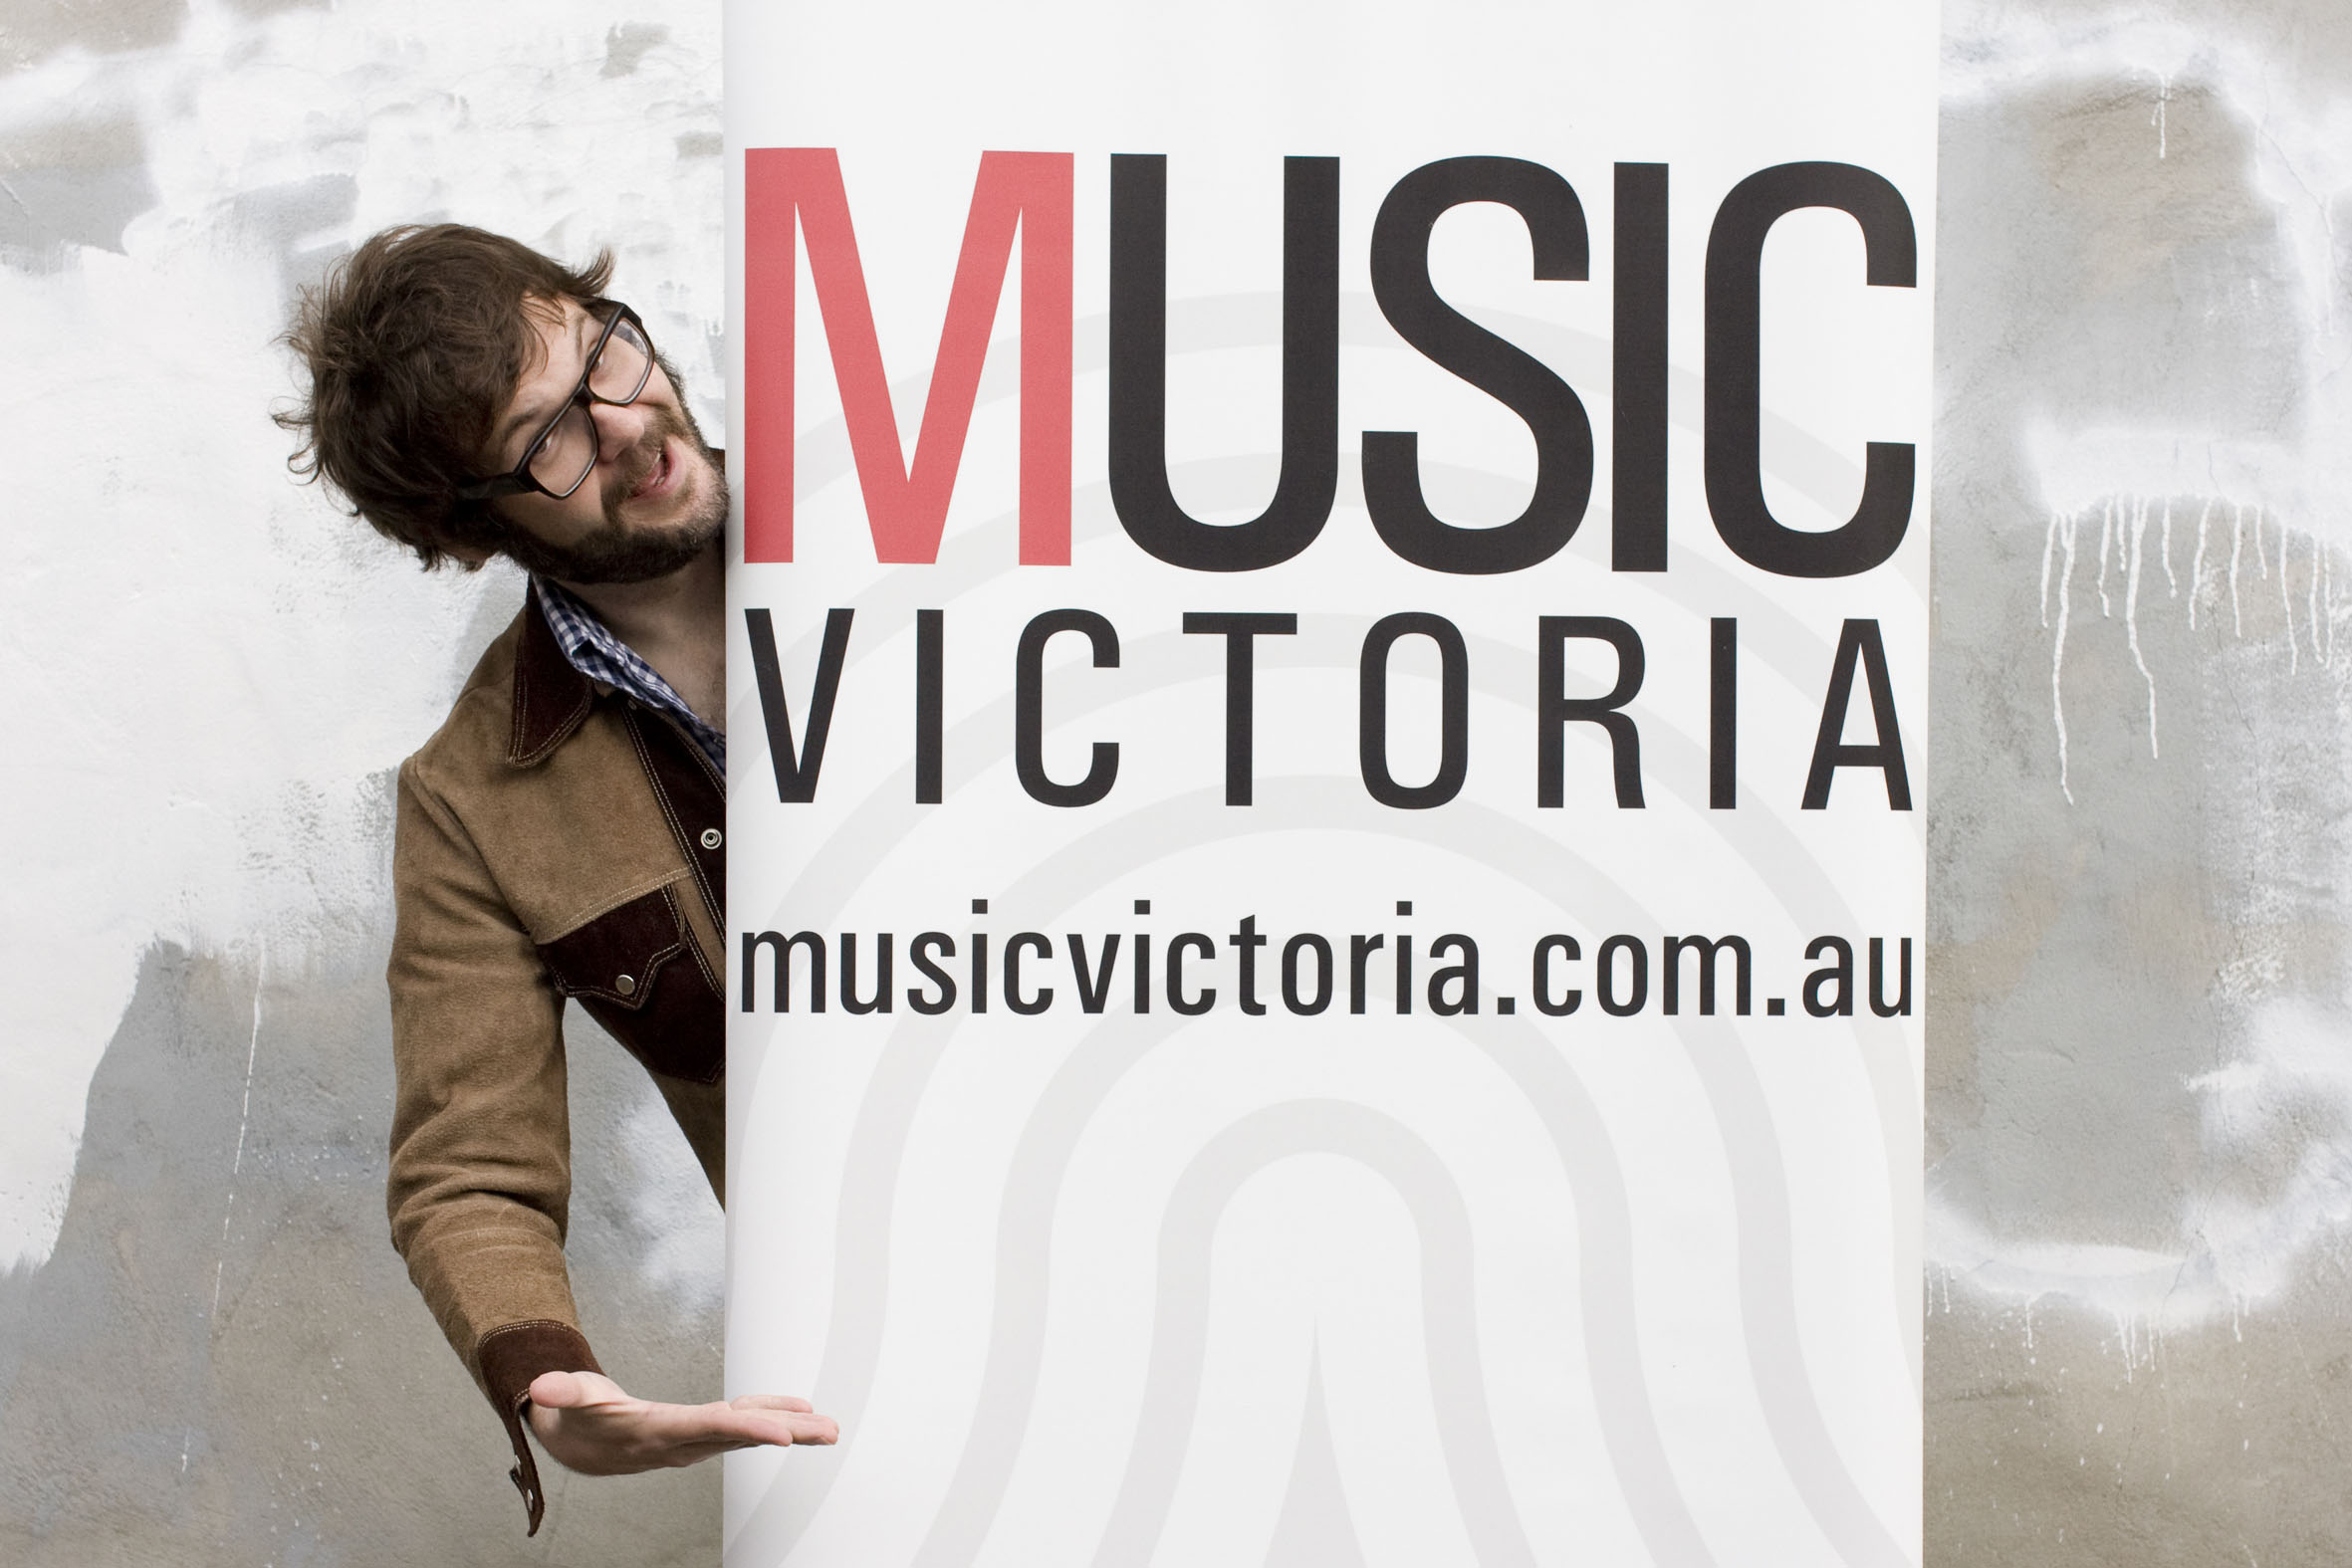 Music Victoria membership drive kicks off March 18th!